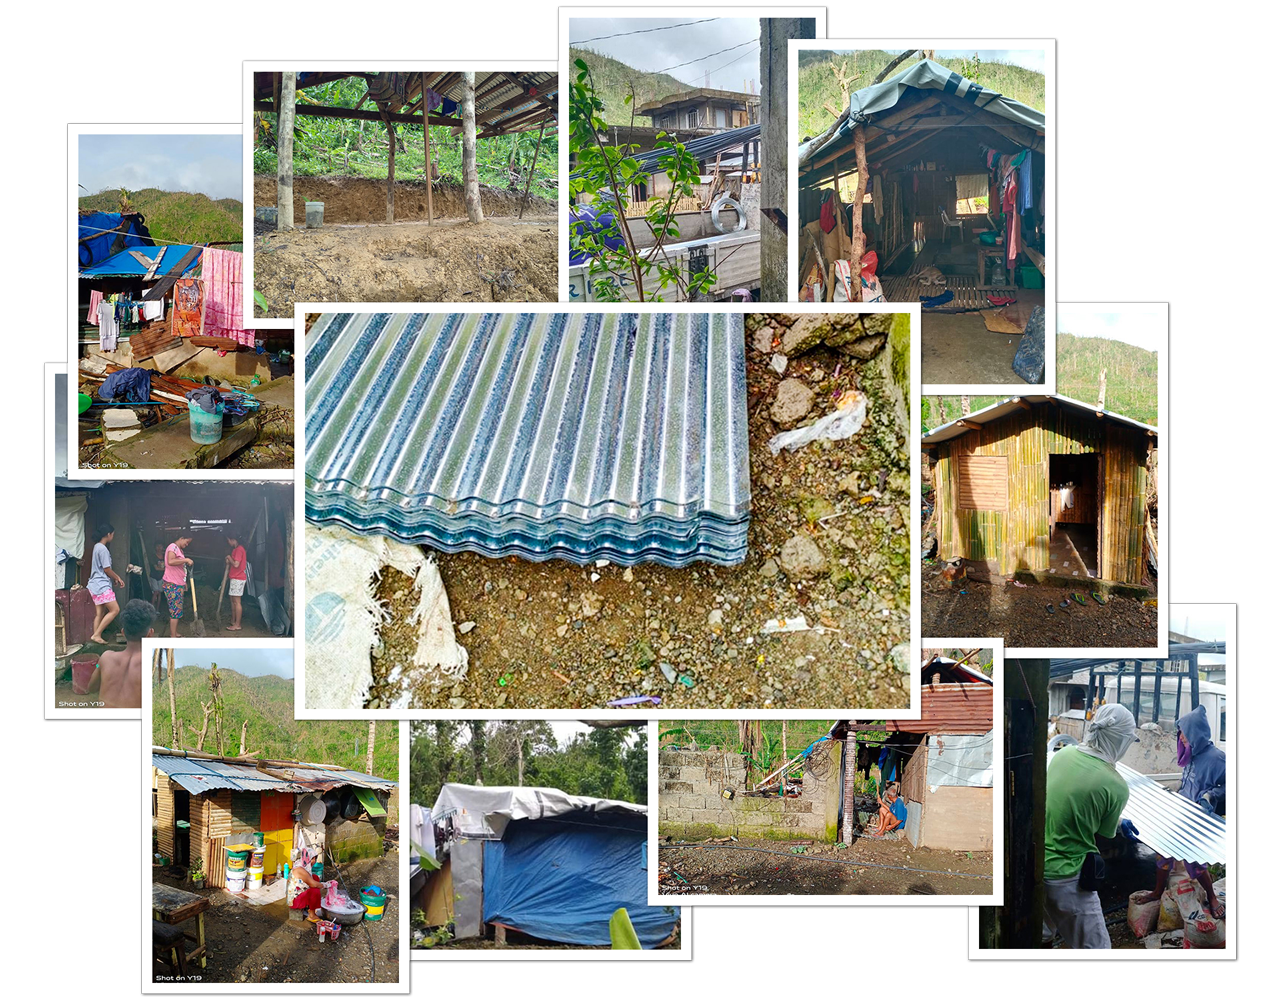 New Steel Roofing For Oguis Village Shanties